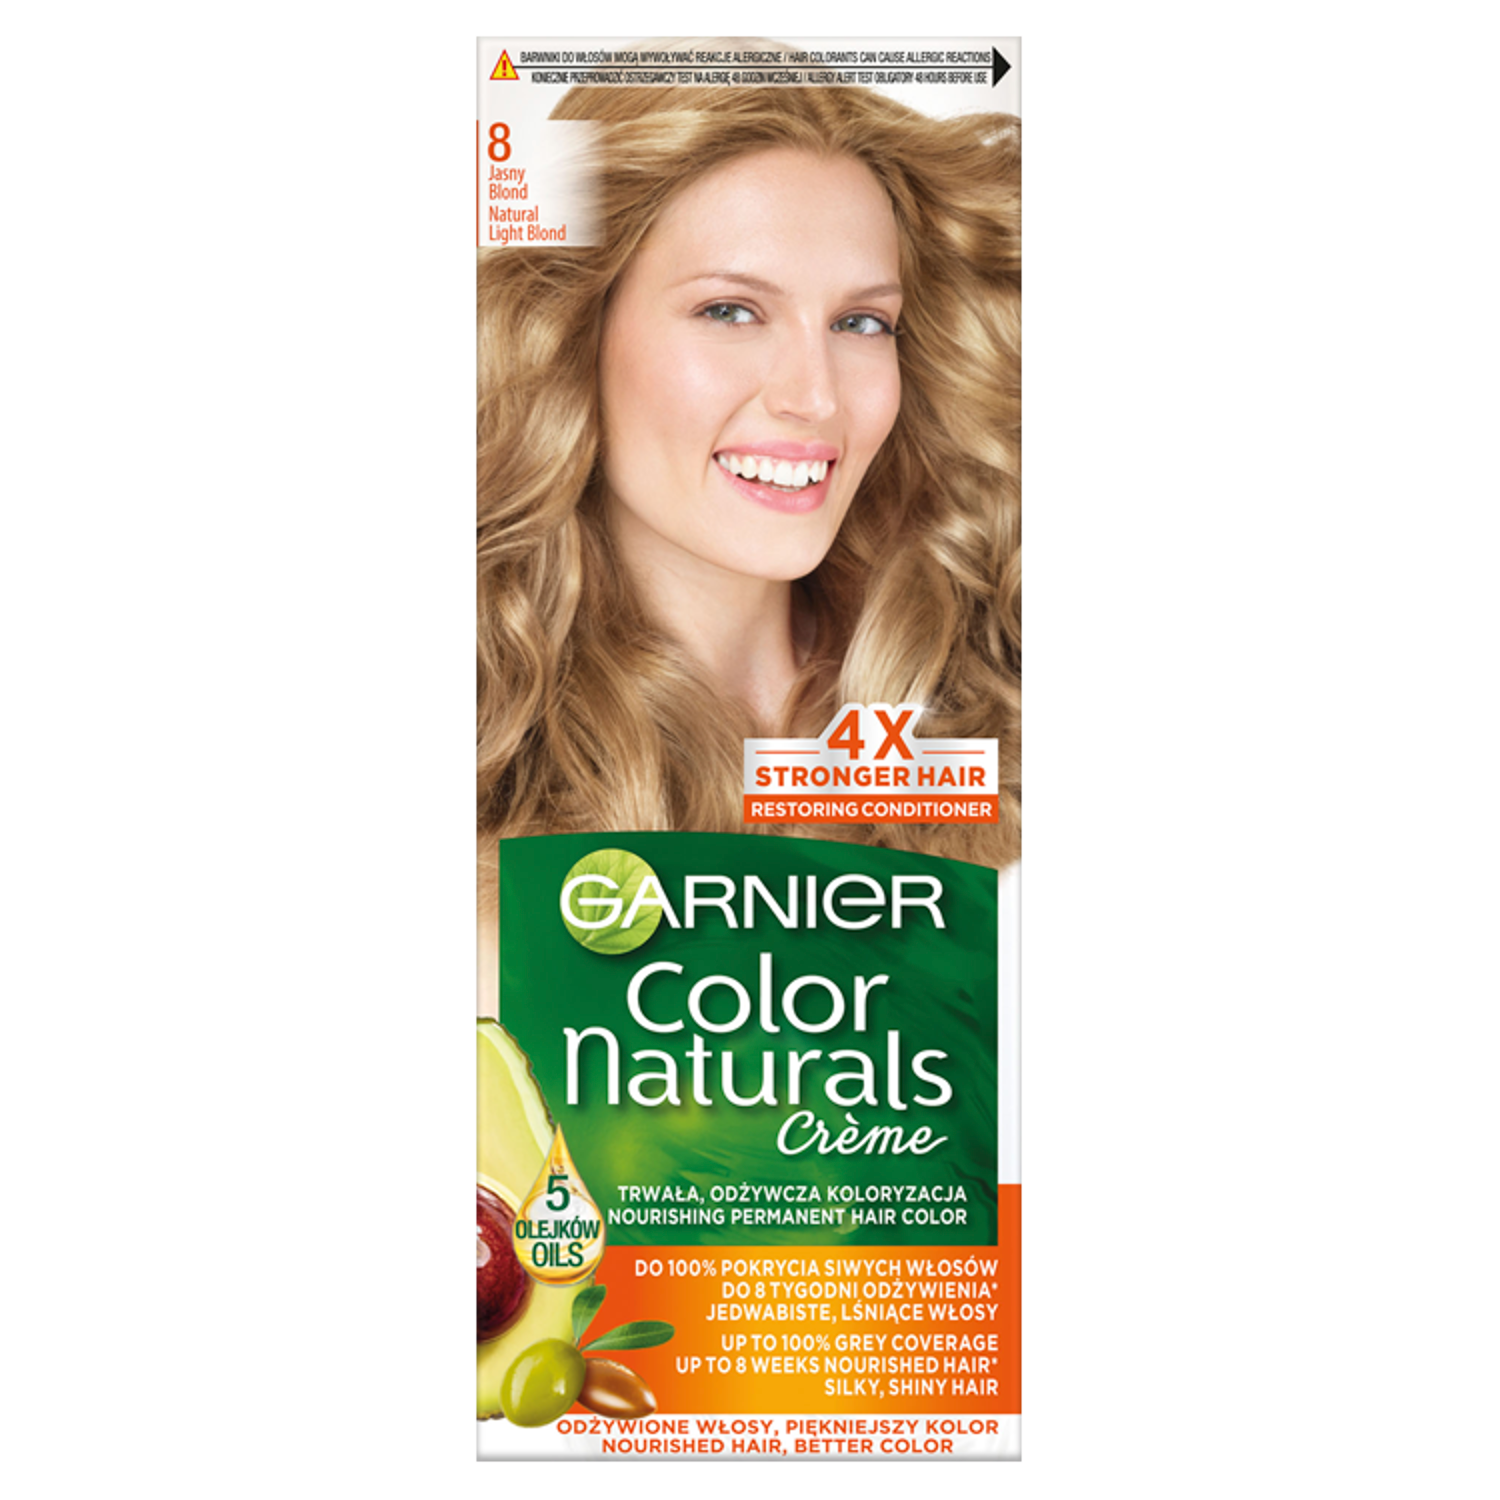 Garnier Color Naturals Créme farba do włosów 8 jasny blond, 1 opak. |  hebe.pl